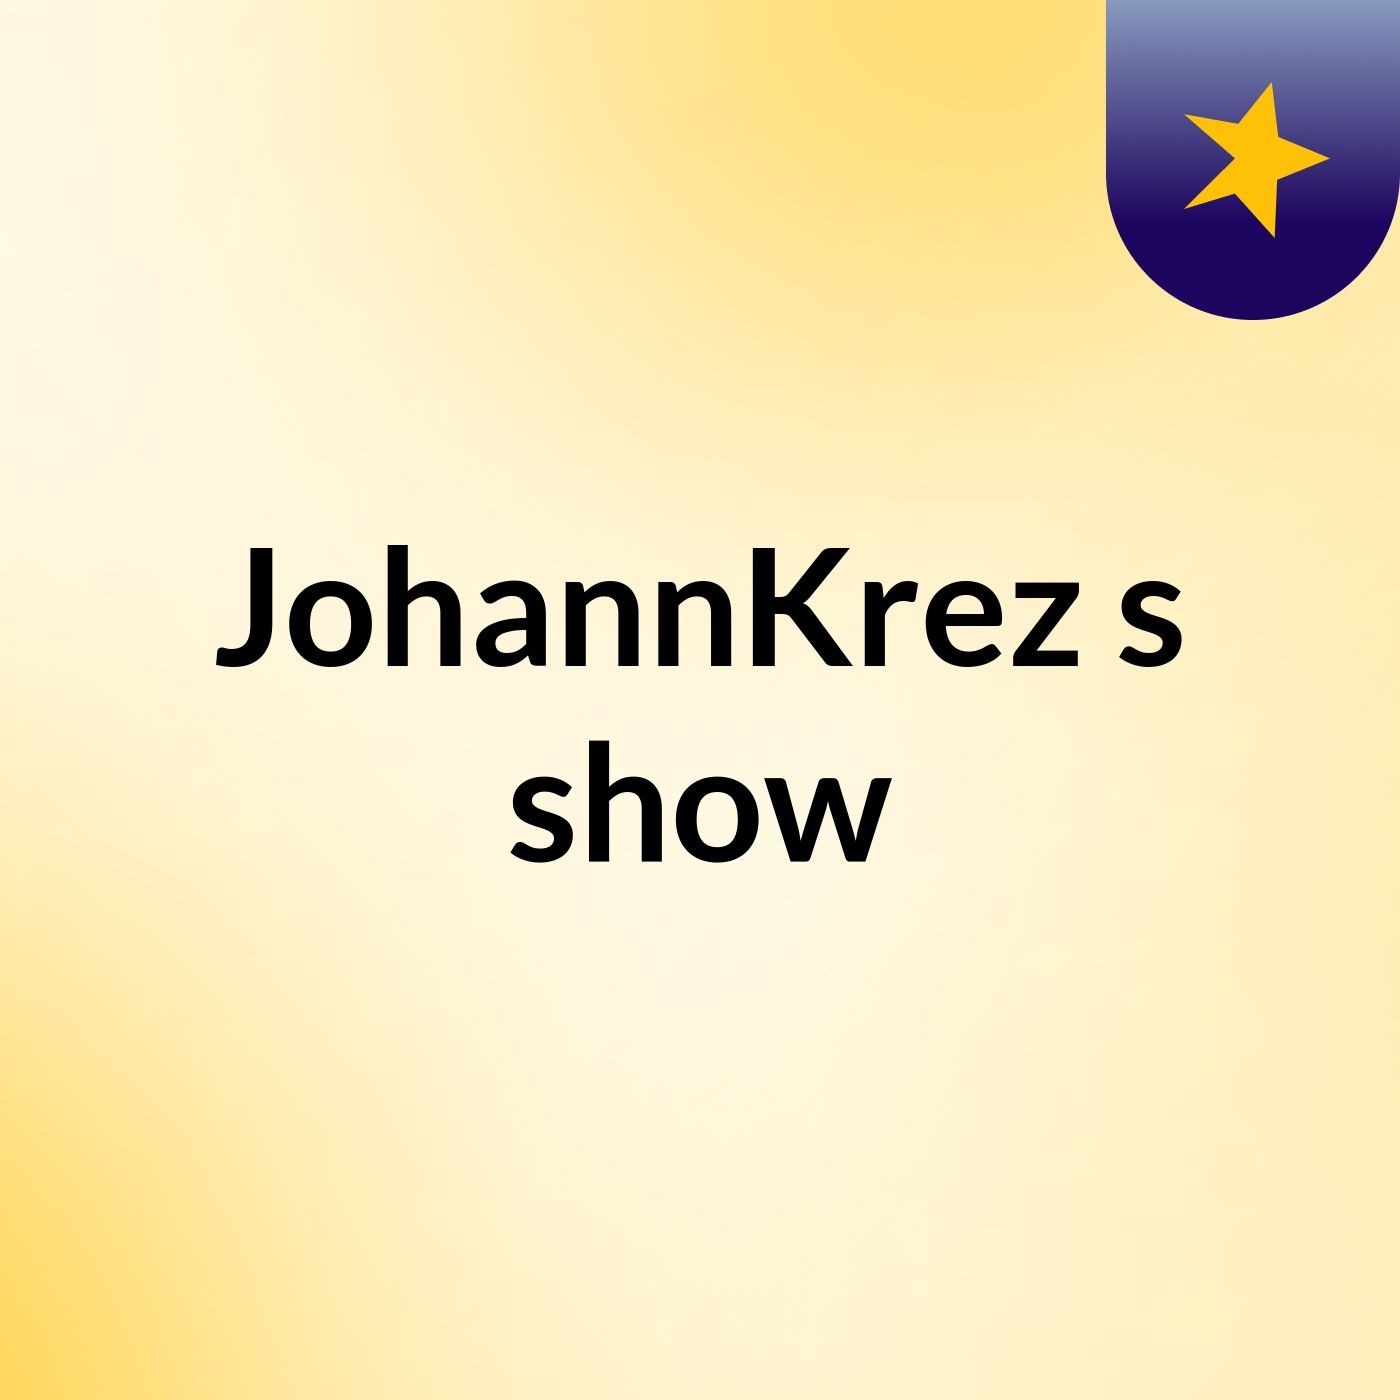 JohannKrez's show